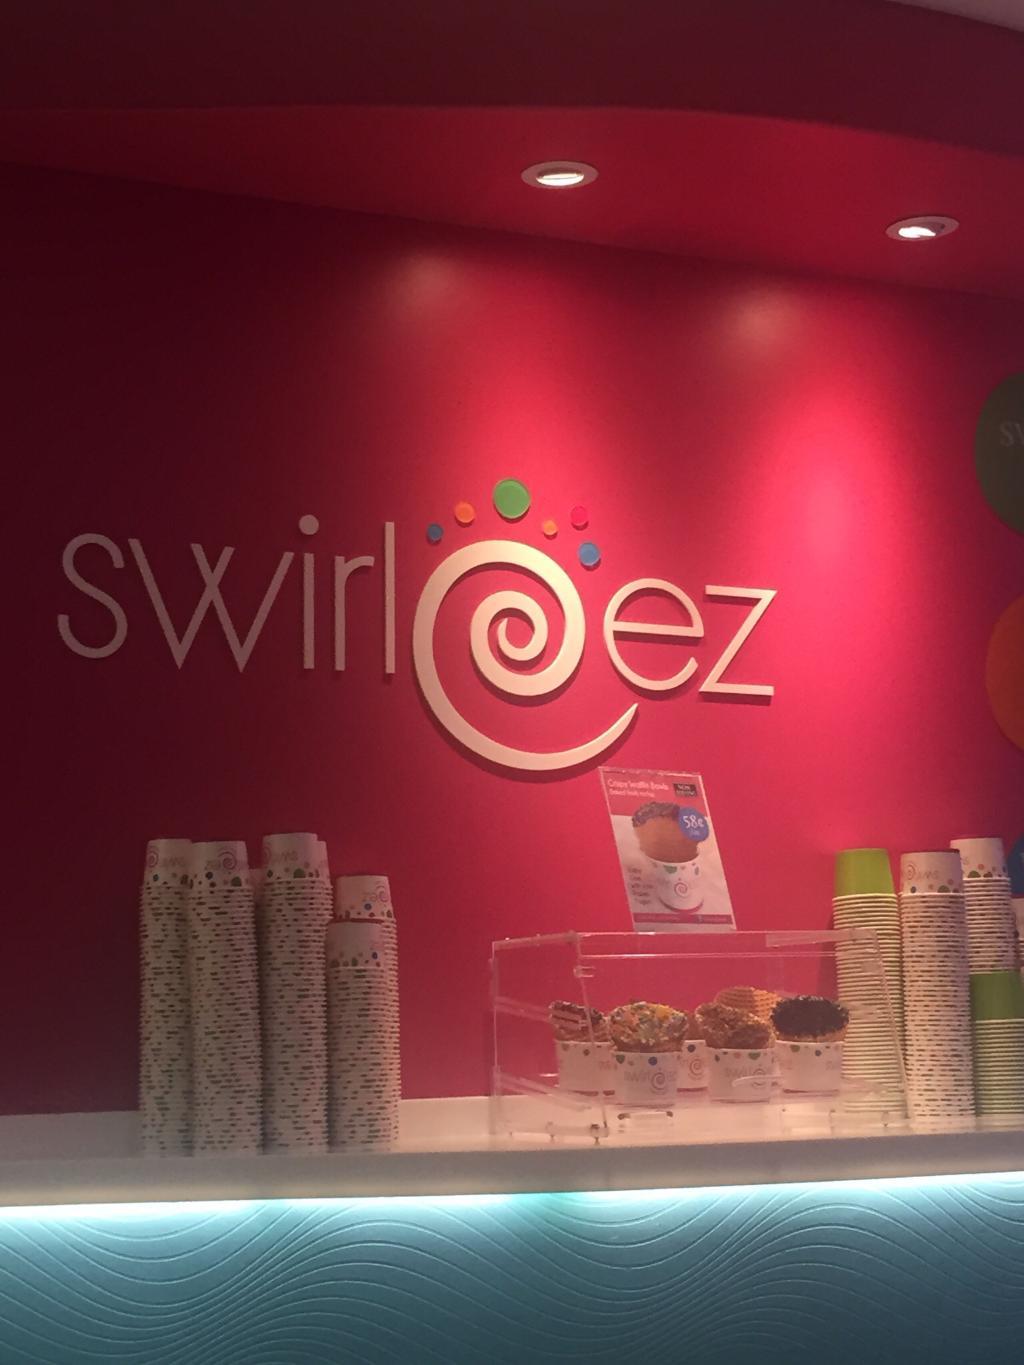 Swirleez Frozen Yogurt